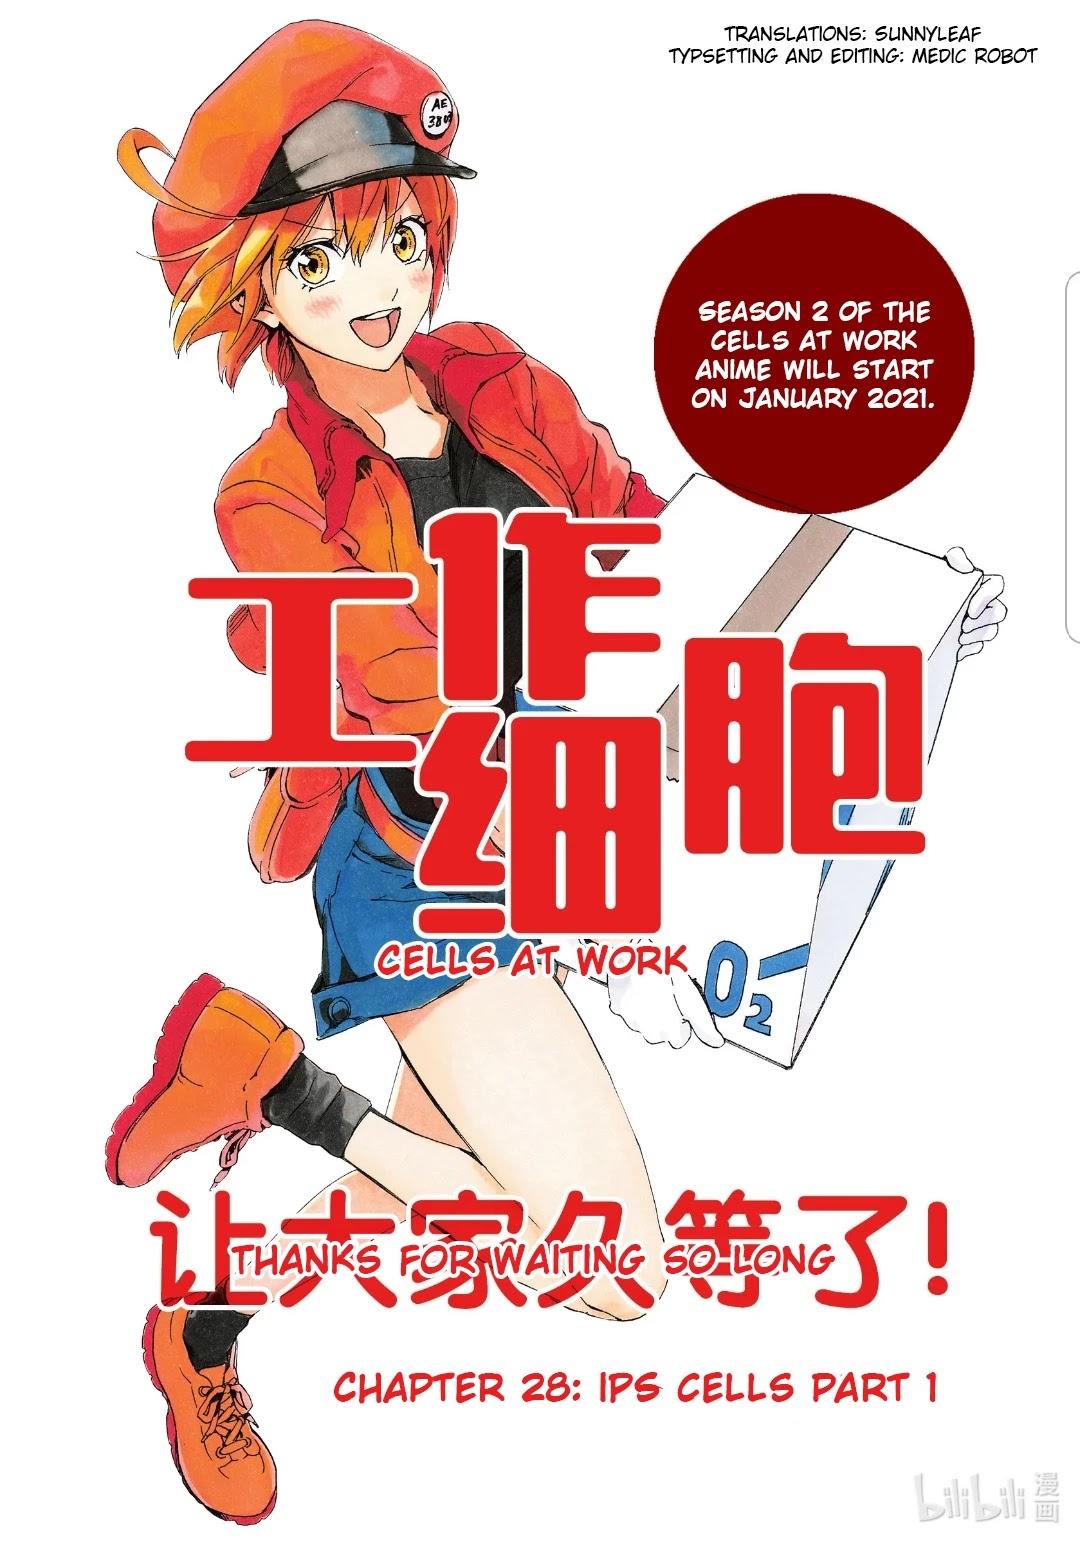 Read Hataraku Saibou Chapter 28: Ips Cells on Mangakakalot